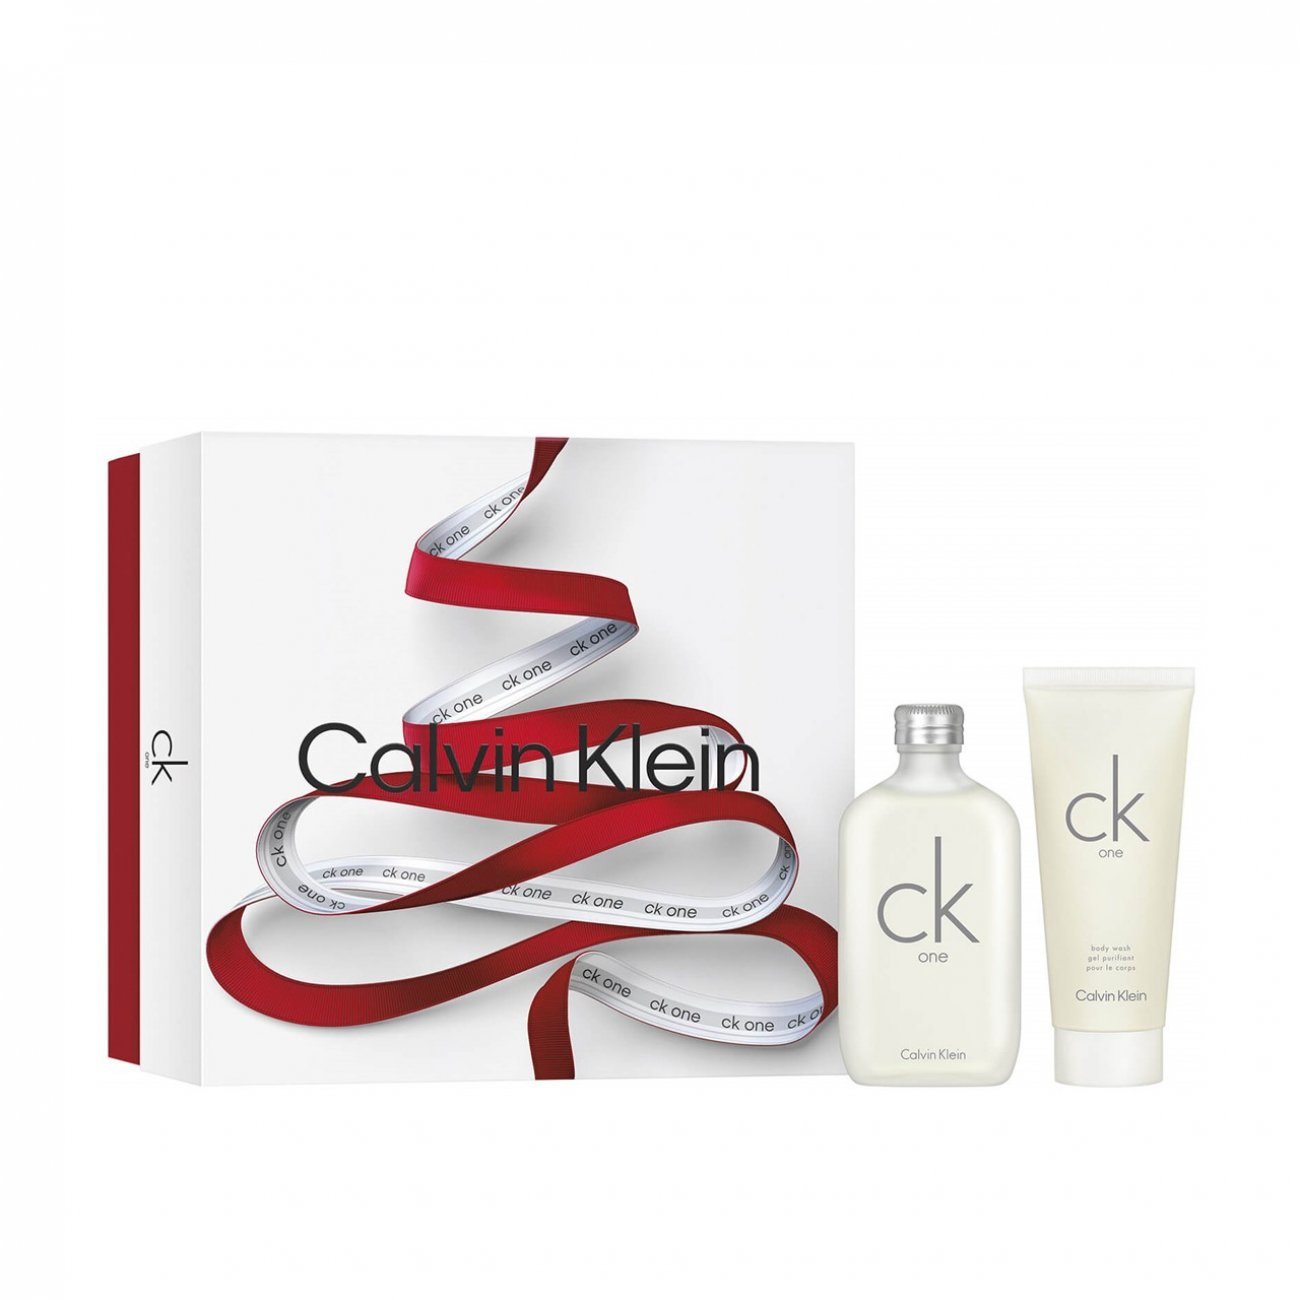 Buy GIFT SET:Calvin Klein CK One Eau de Toilette 200ml Coffret · South  Africa